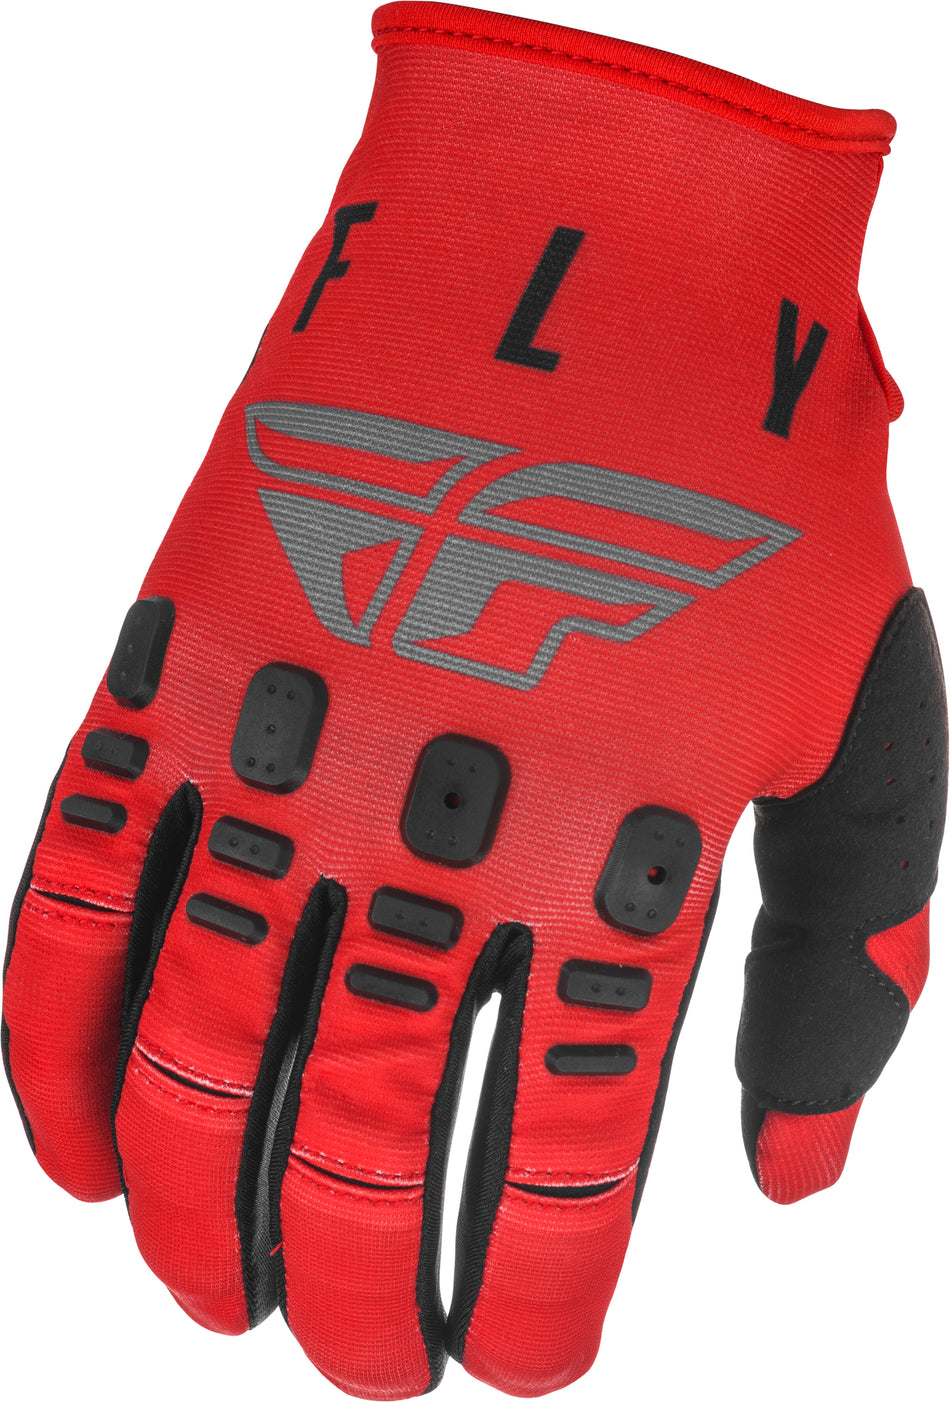 FLY RACING Kinetic K121 Gloves Red/Grey/Black Sz 12 374-41212